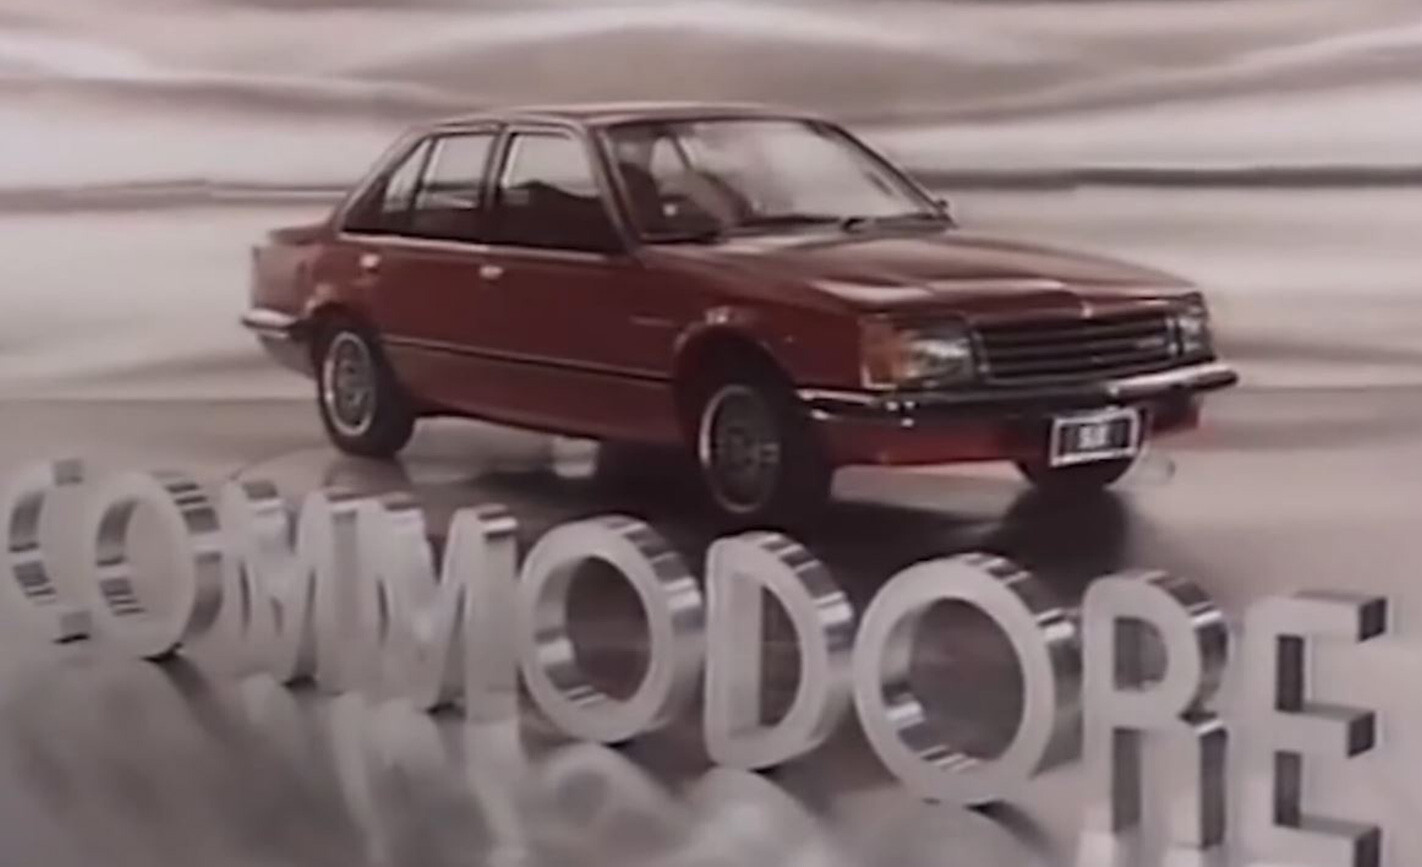 Holden Commodore